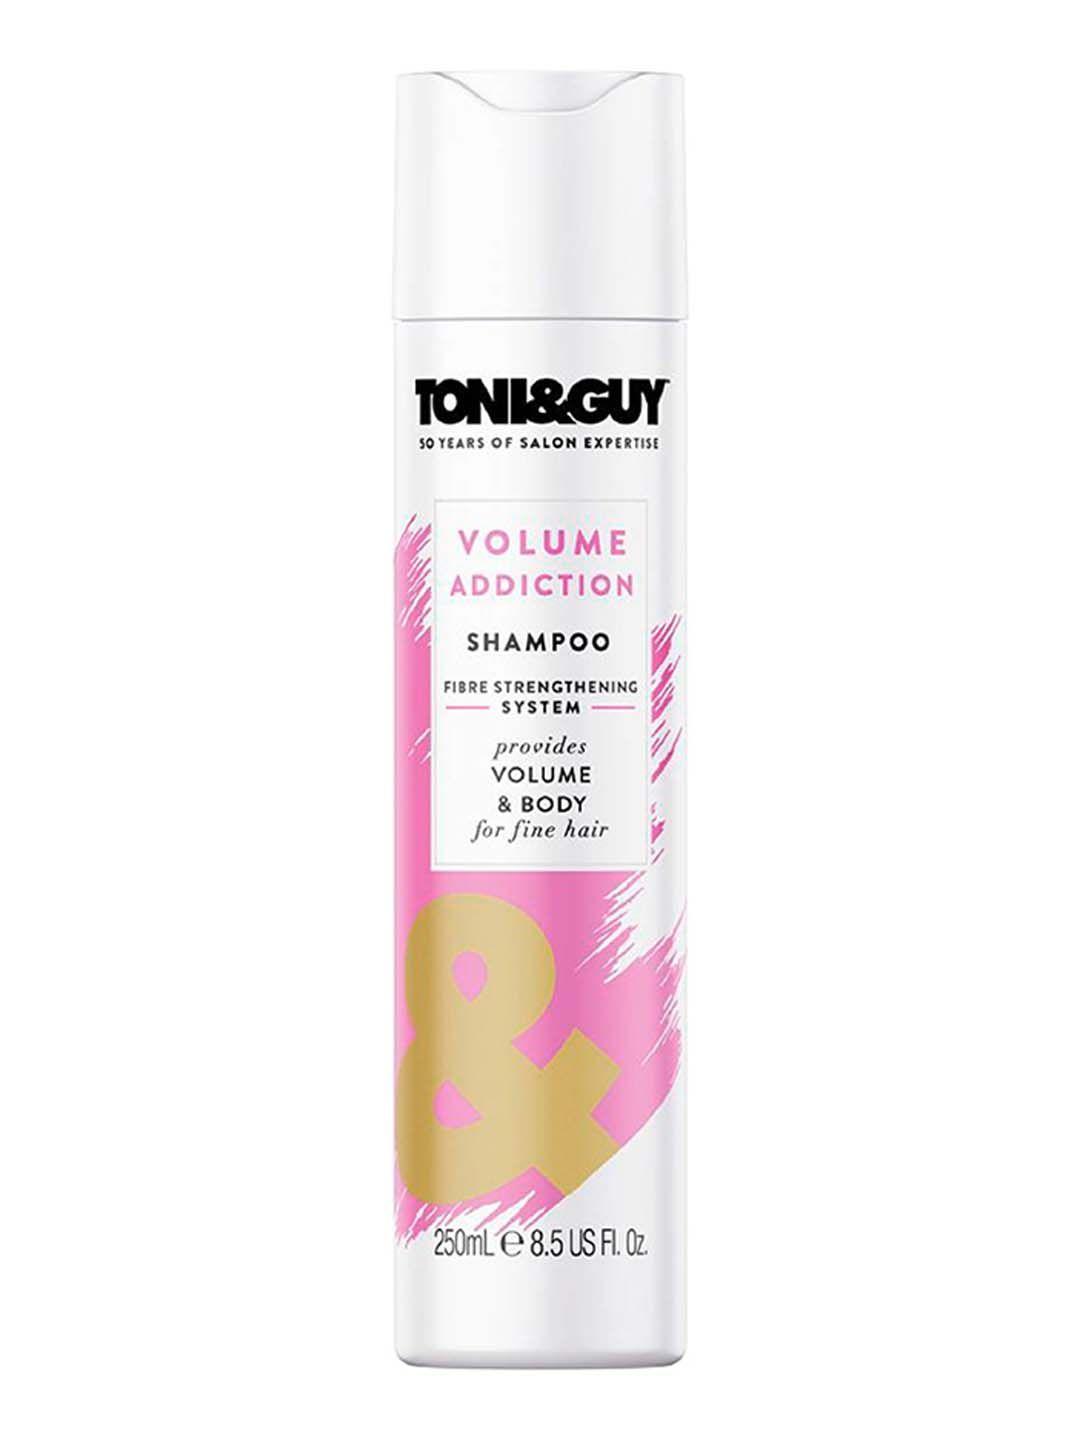 toni & guy volume addiction shampoo - gives volume & body to fine hair - 250ml